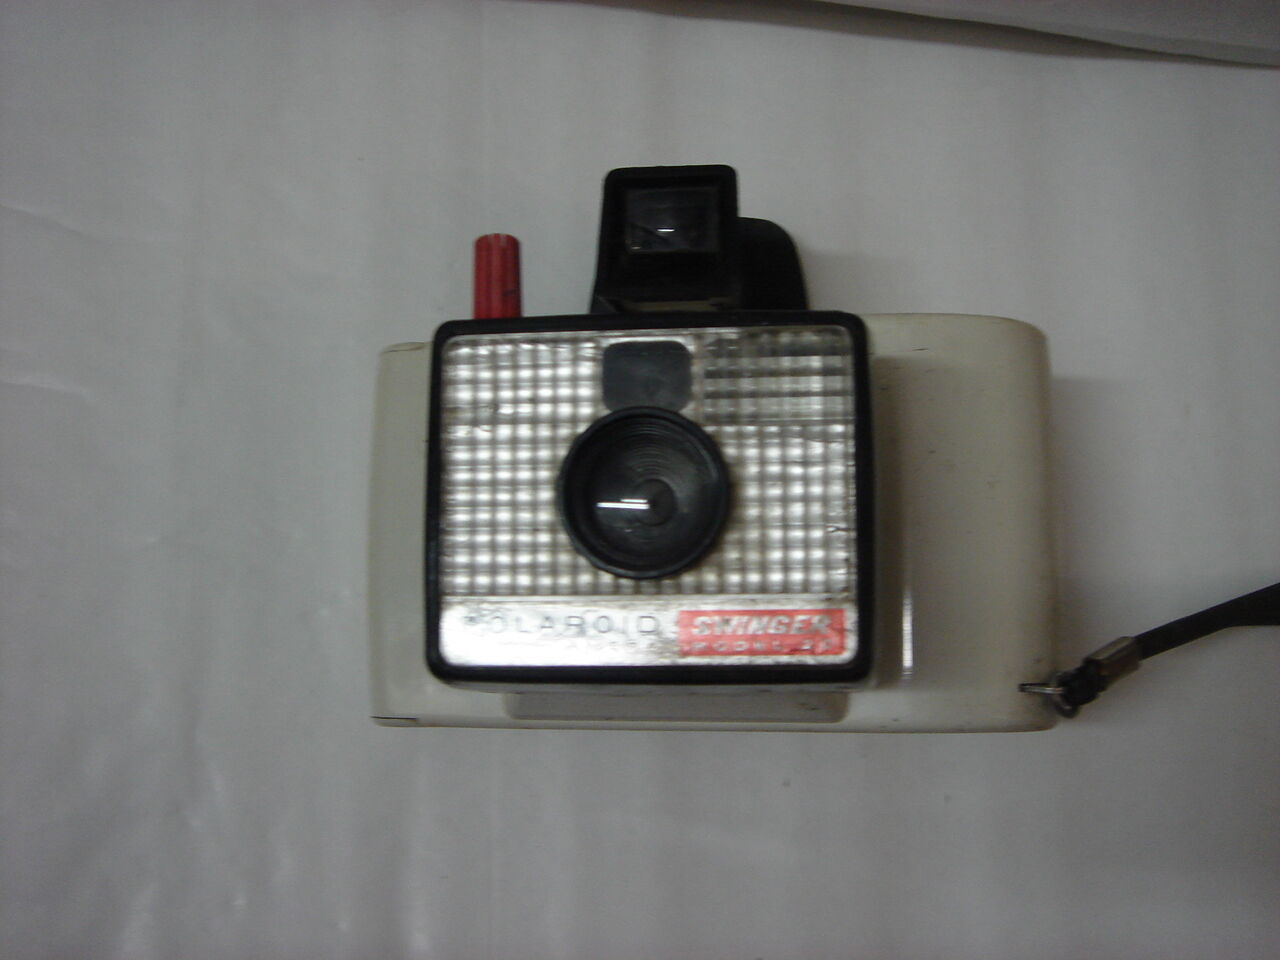 camera polaroid Swinger Model 20 to 1980/85 Selency image image